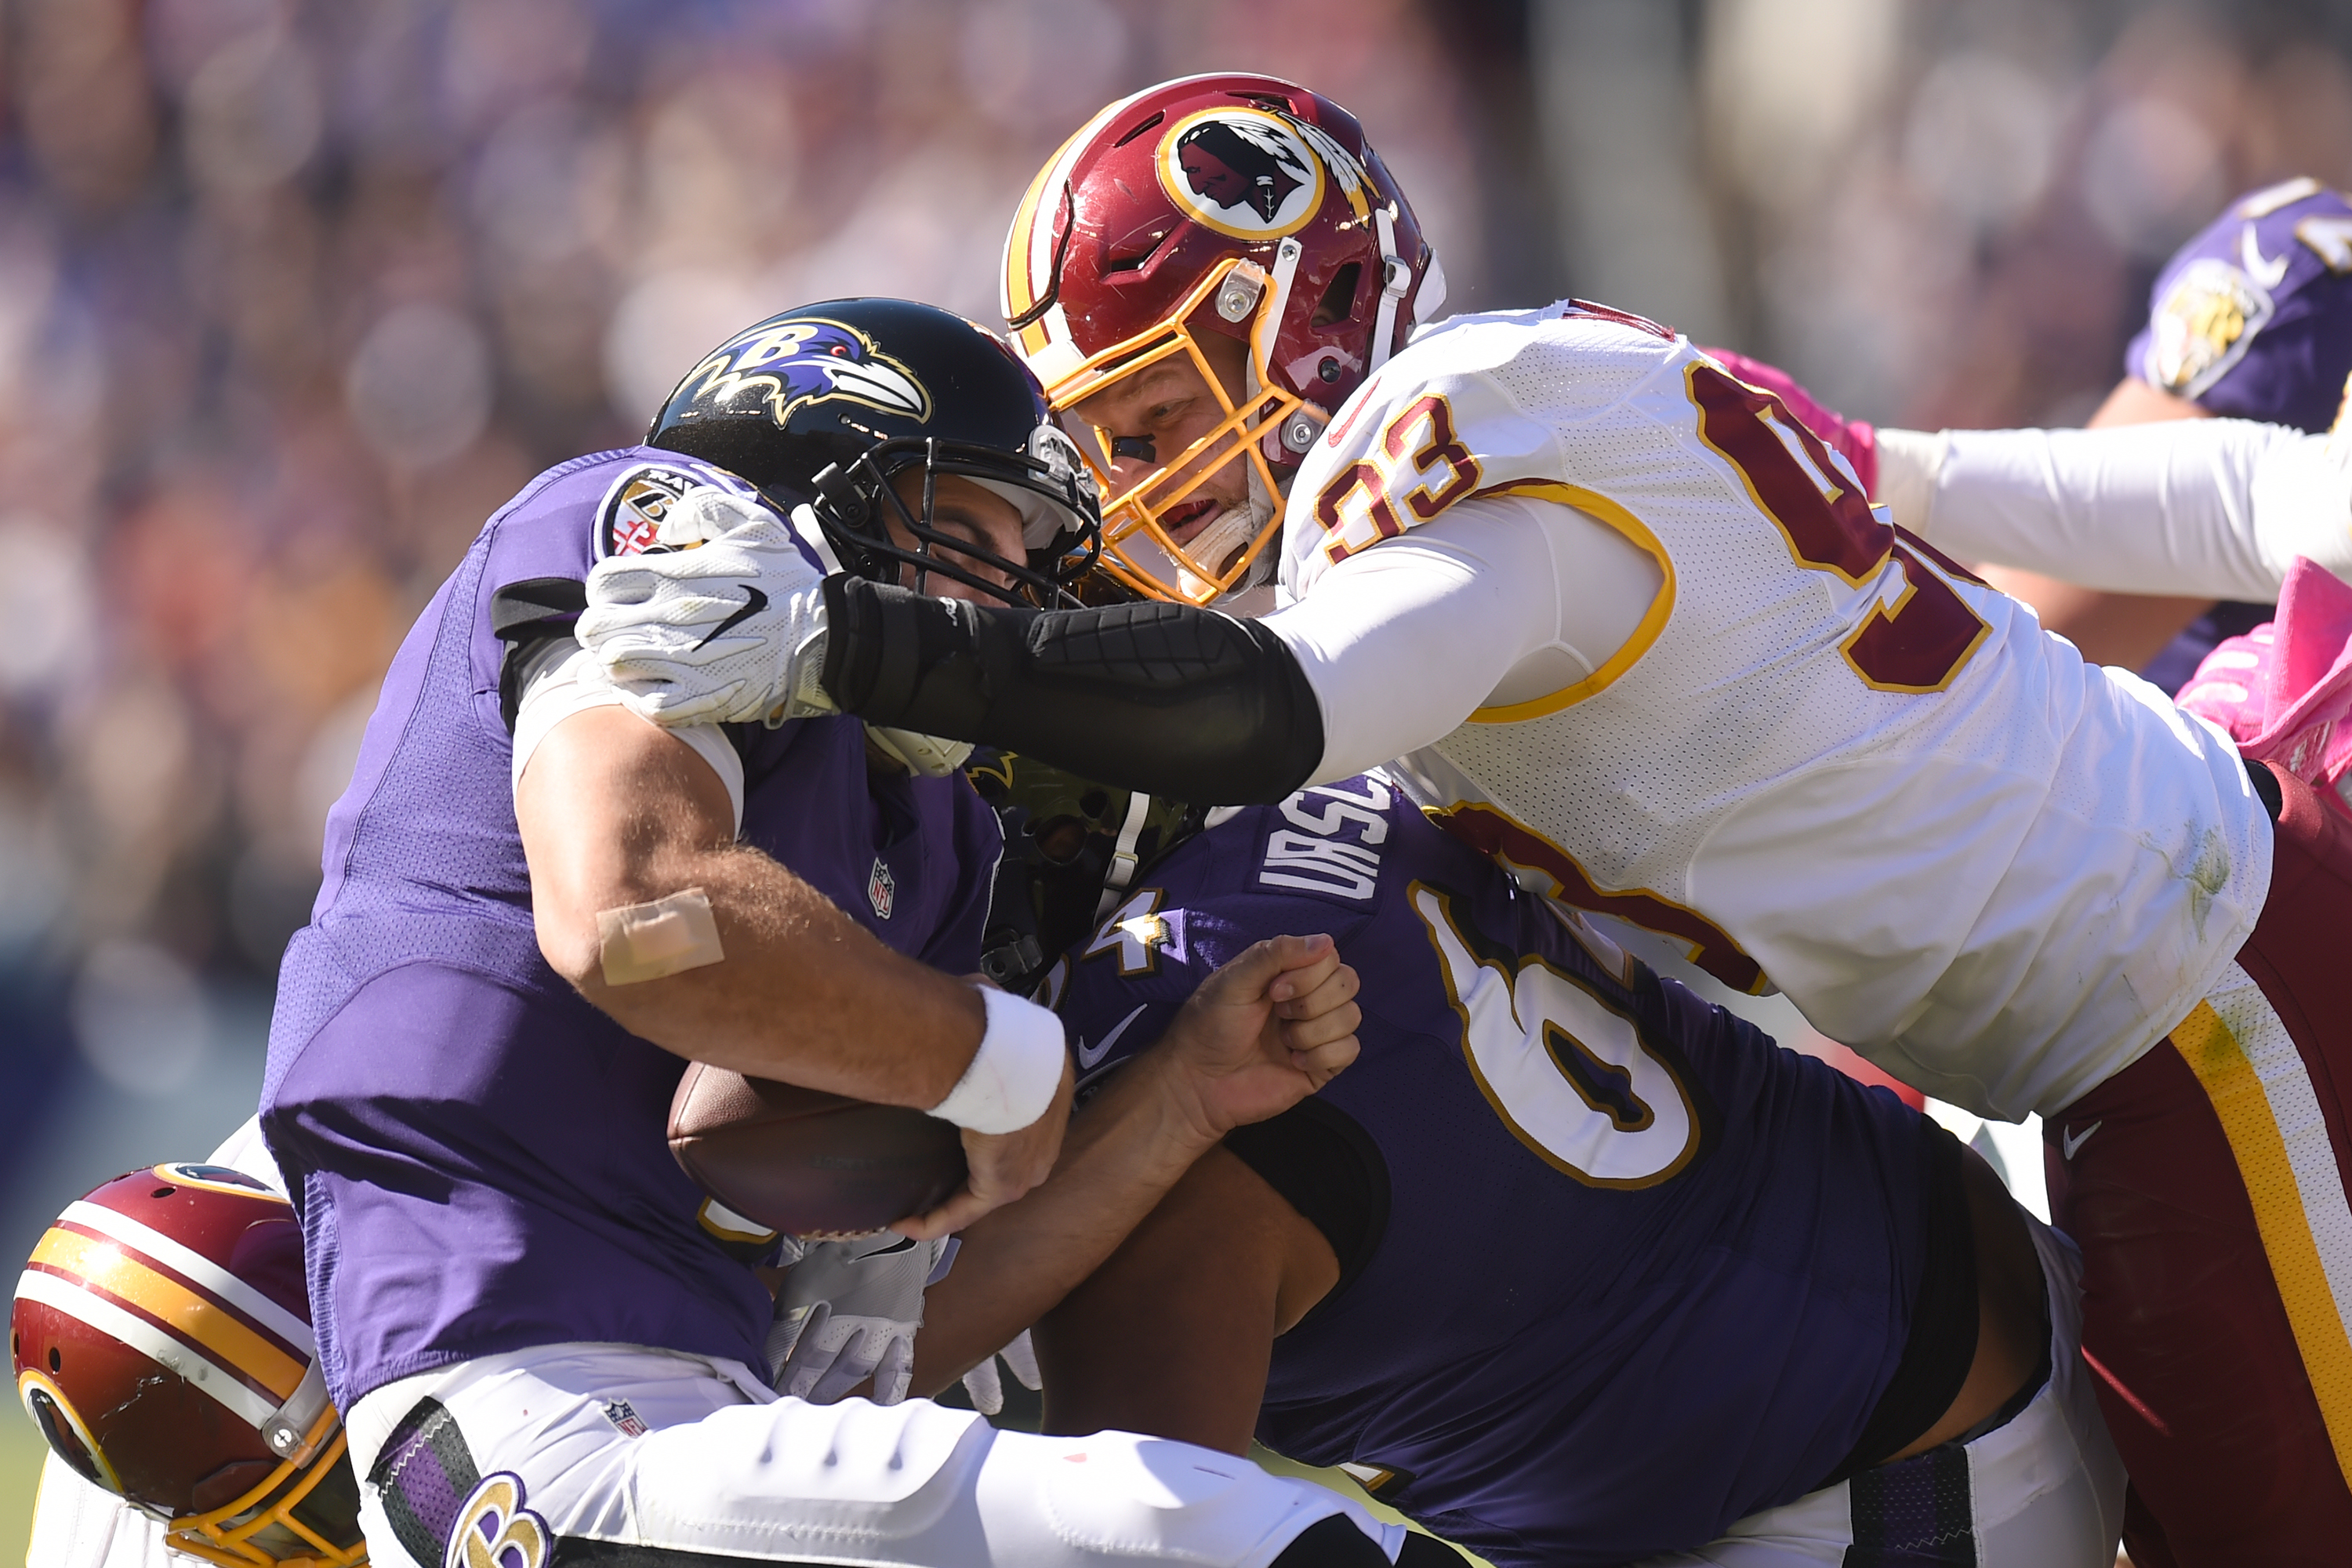 Redskins vs Ravens live stream: Watch NFL Preseason online